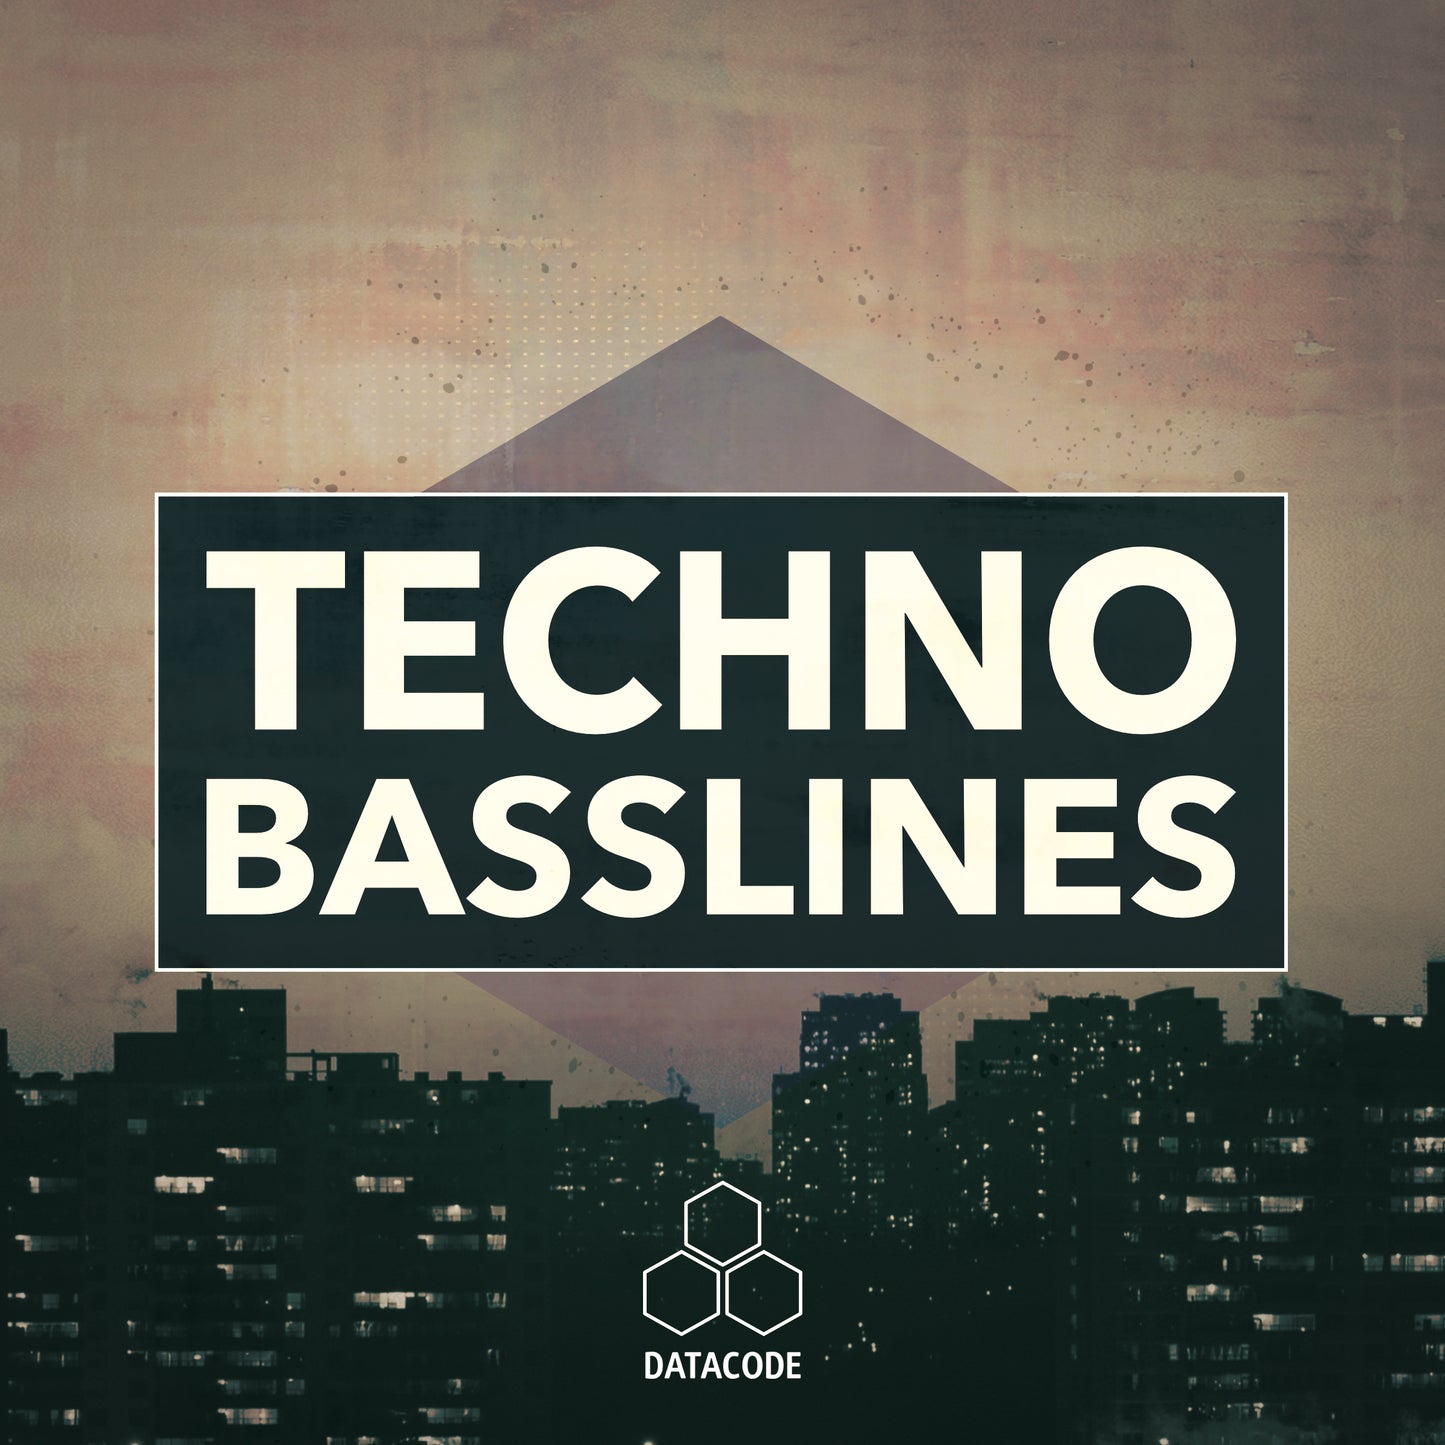 FOCUS: Techno Basslines